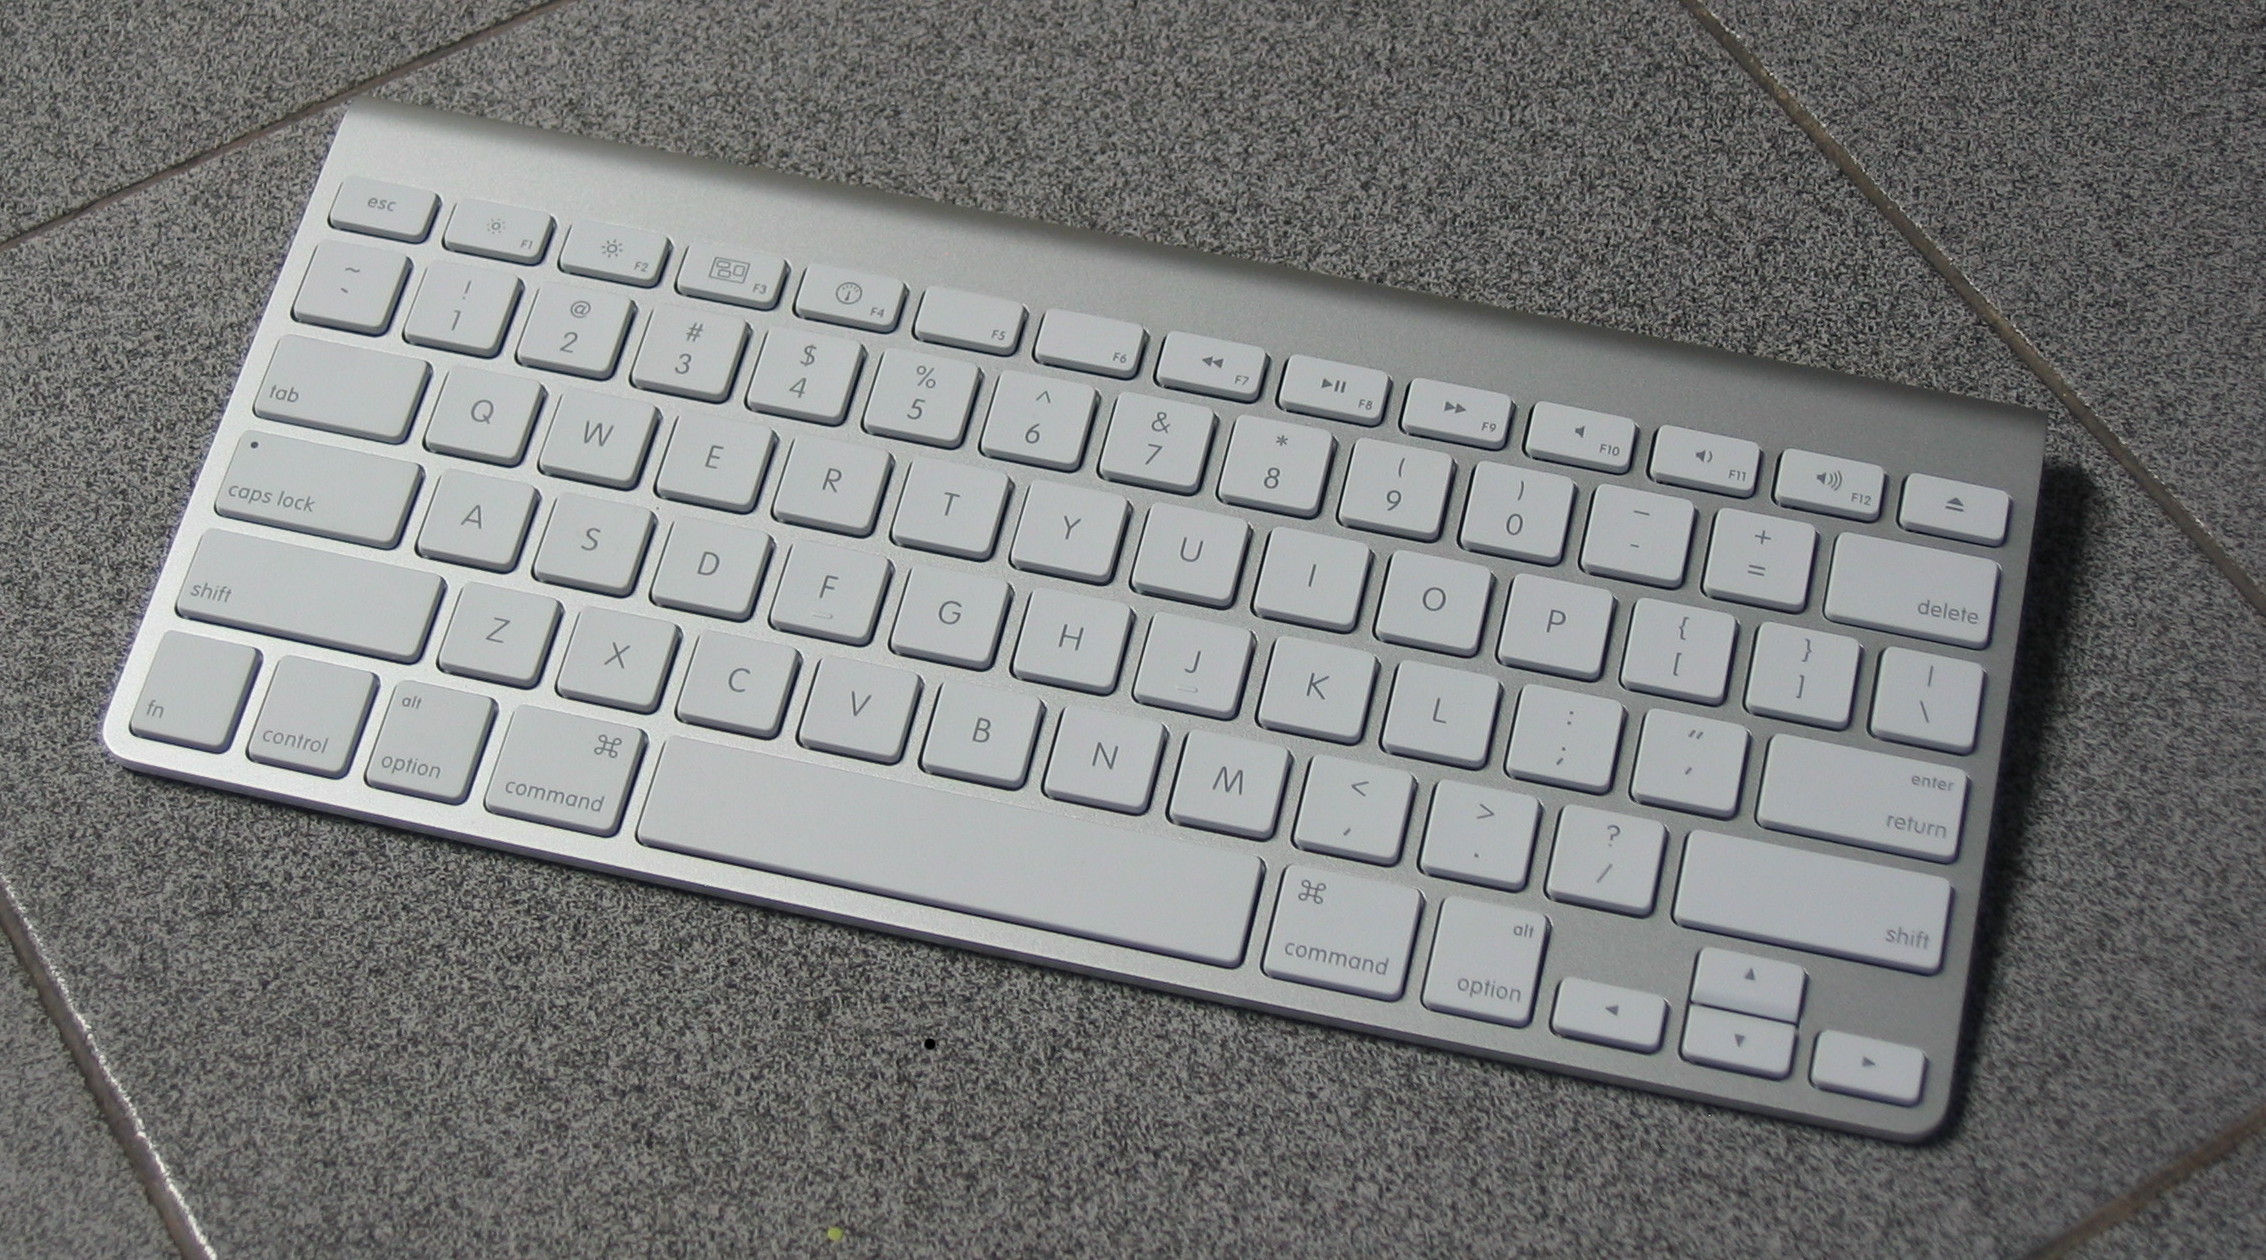 Apple wireless keyboard aluminum 2007 74705